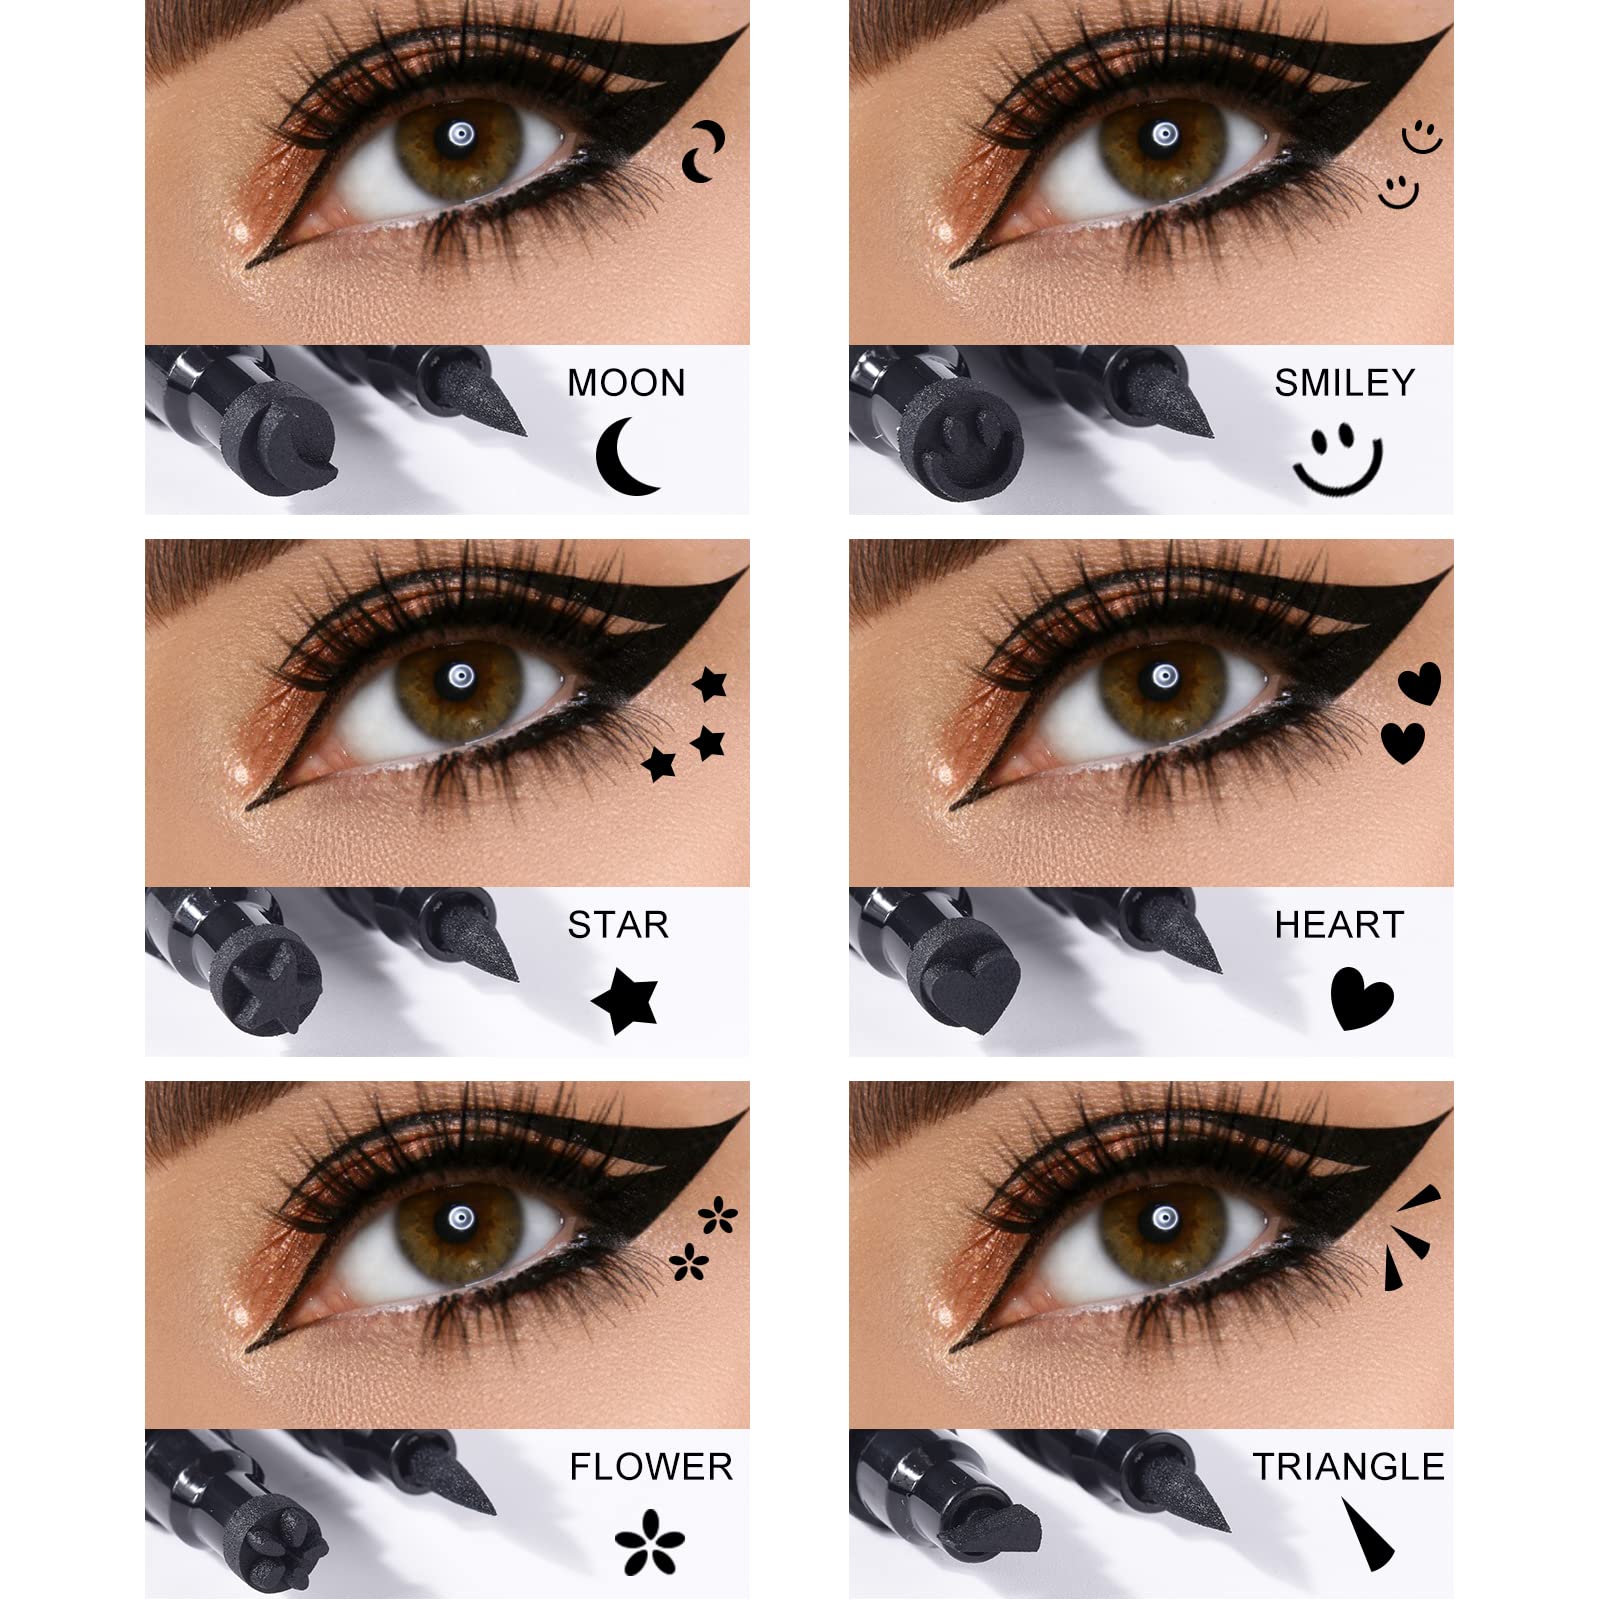 Ownest 6 Pcs Liquid Eyeliner Set,Double-Side Waterproof Smudge-proof Eyeliner Stamp Pen Eyeliner Tattoo Tool Makeup-Smiley, Triangle,Heart,Star,Moon,Flower